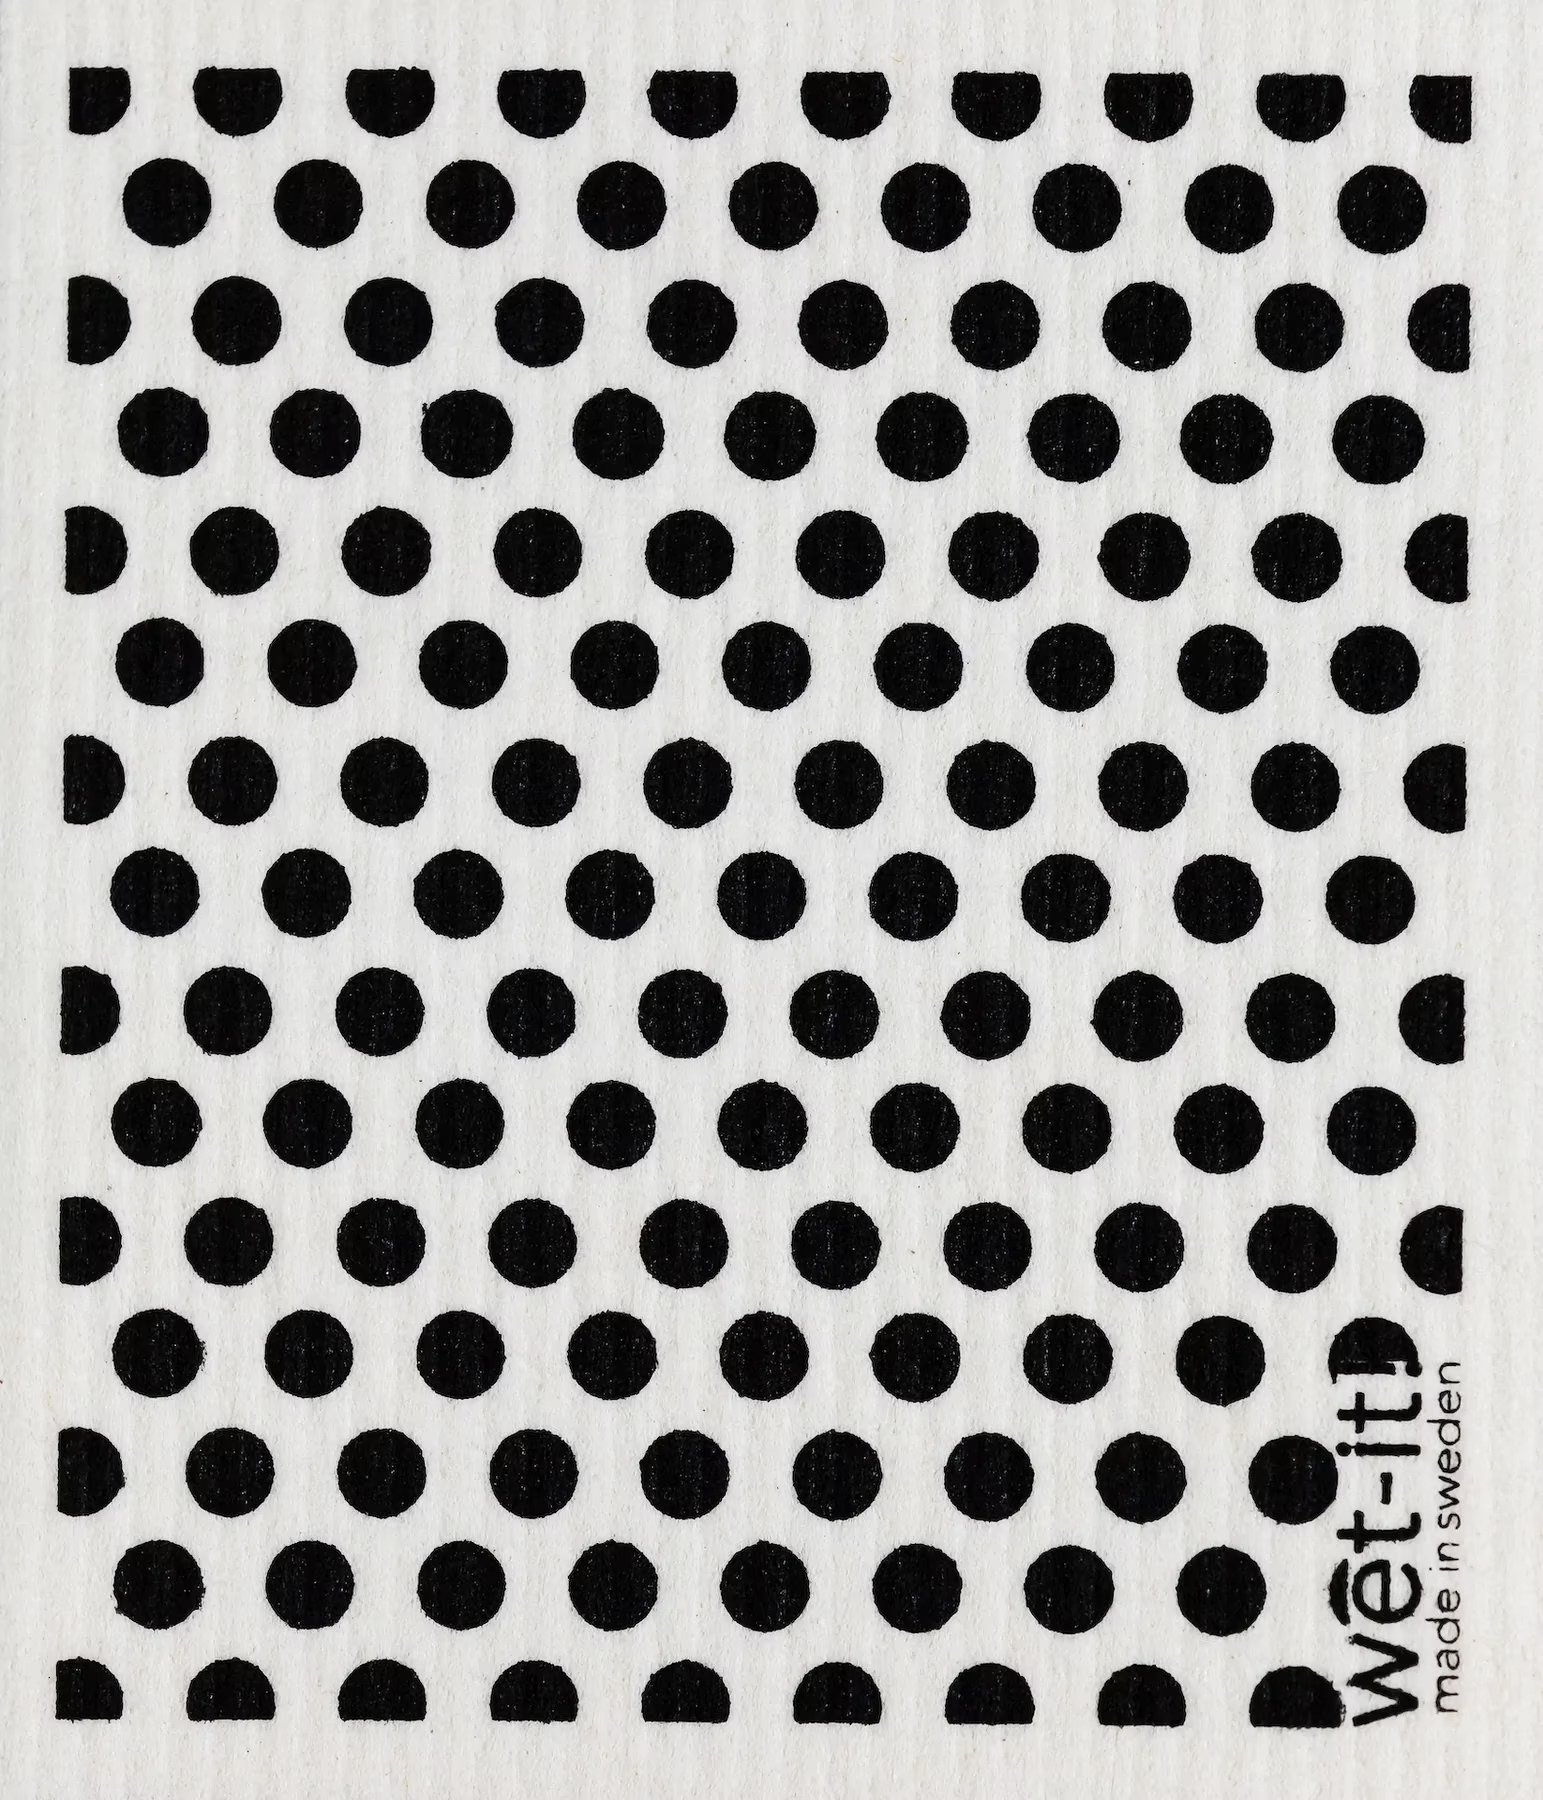 https://artisansshoponline.com/wp-content/uploads/black-polka-dot-cloth.jpg